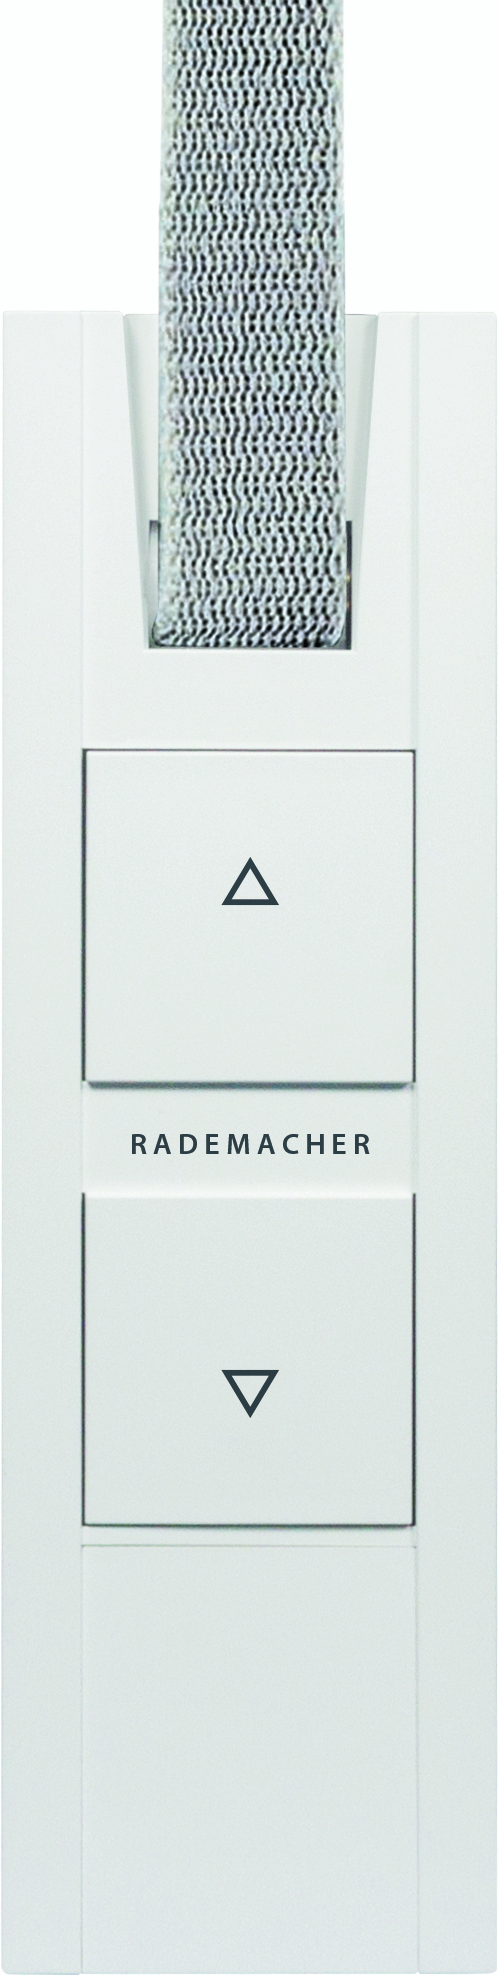 Rademacher RolloTron Basis 1100